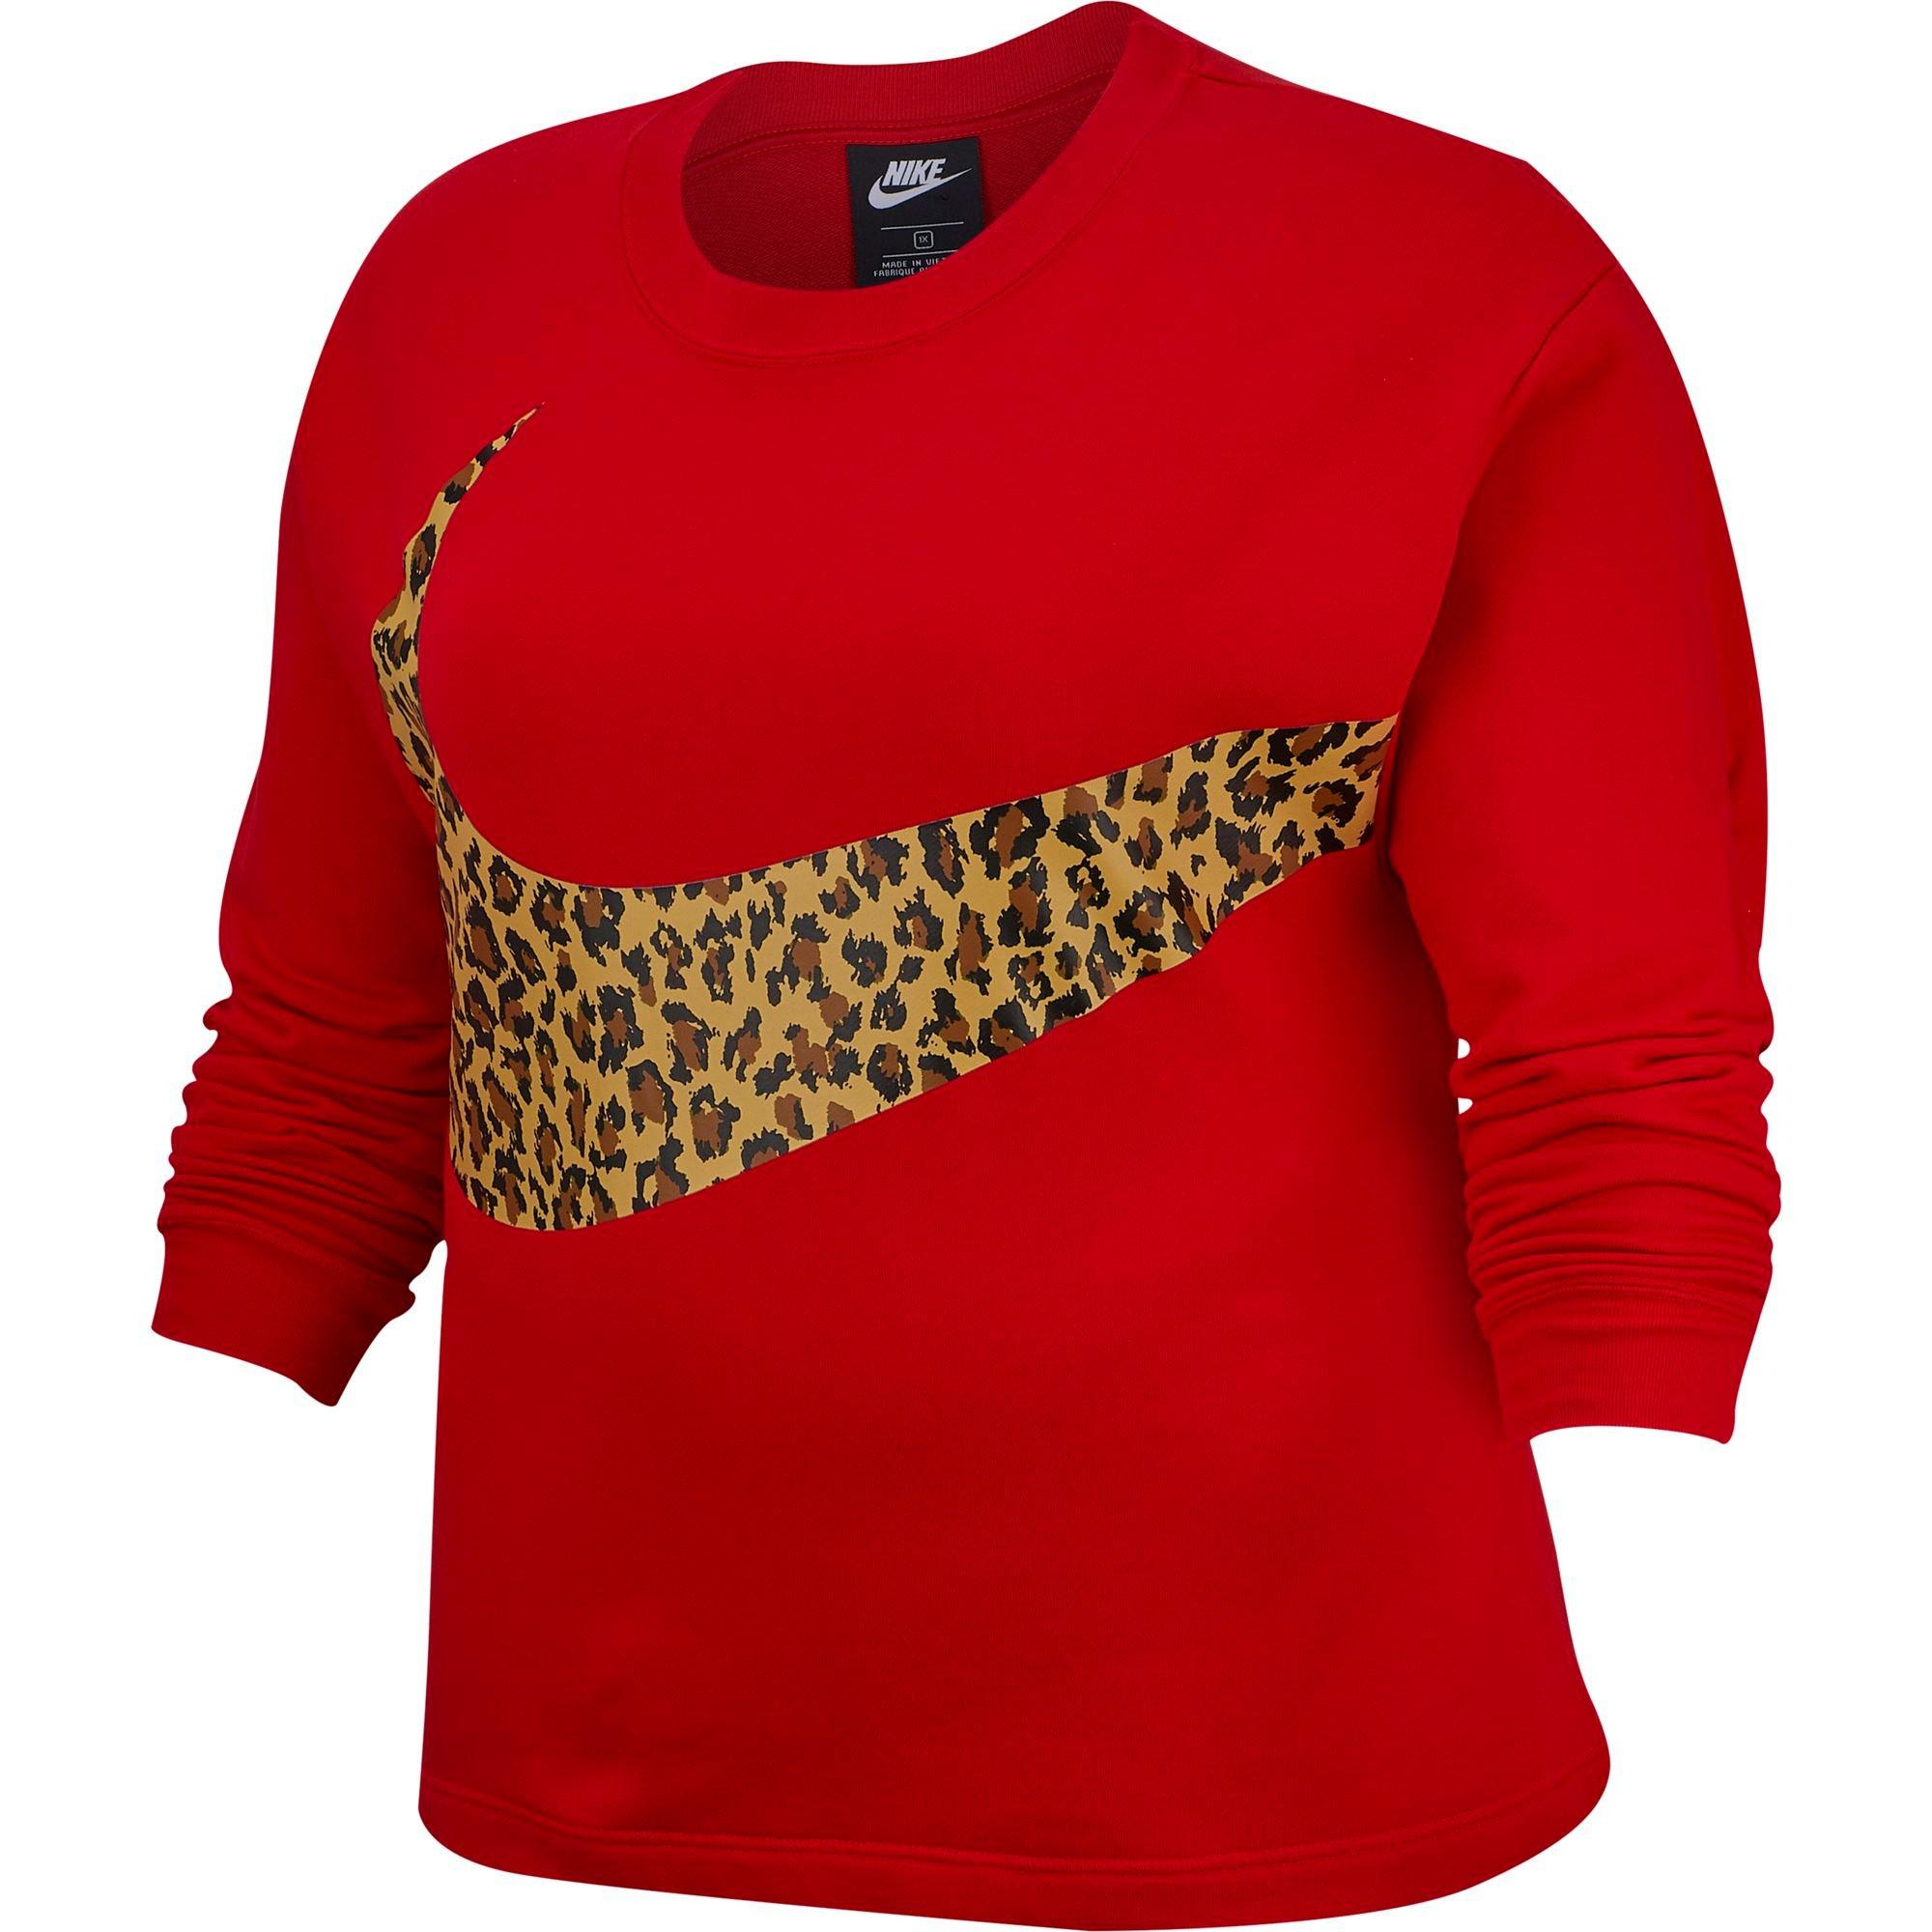 red cheetah nike shirt